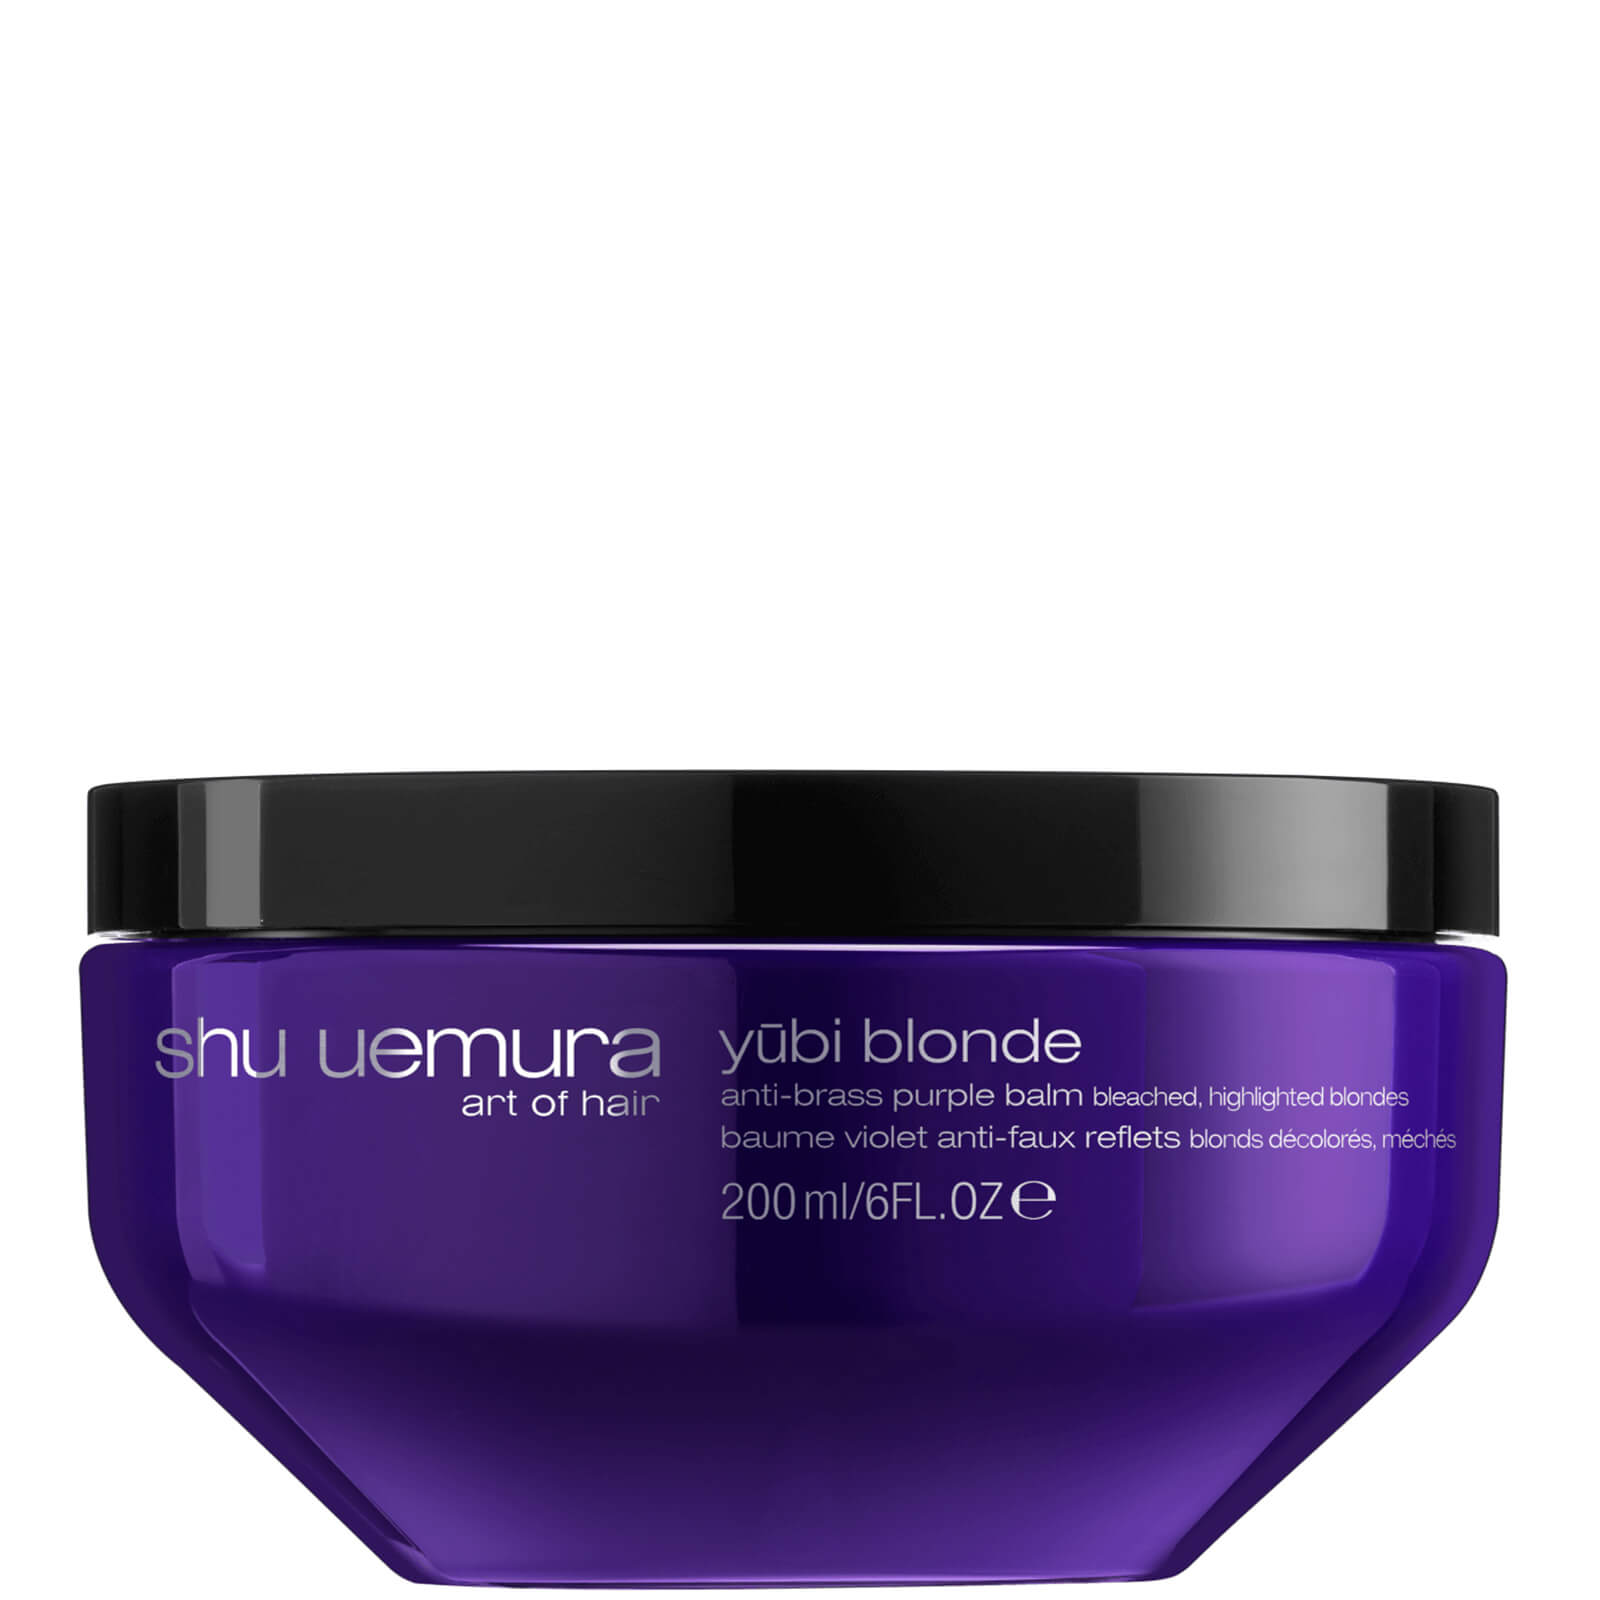 Shu Uemura Art of Hair Yubi Blonde Anti-Brass Purple Balm for Bleached, Highlighted Blonde Hair 200m